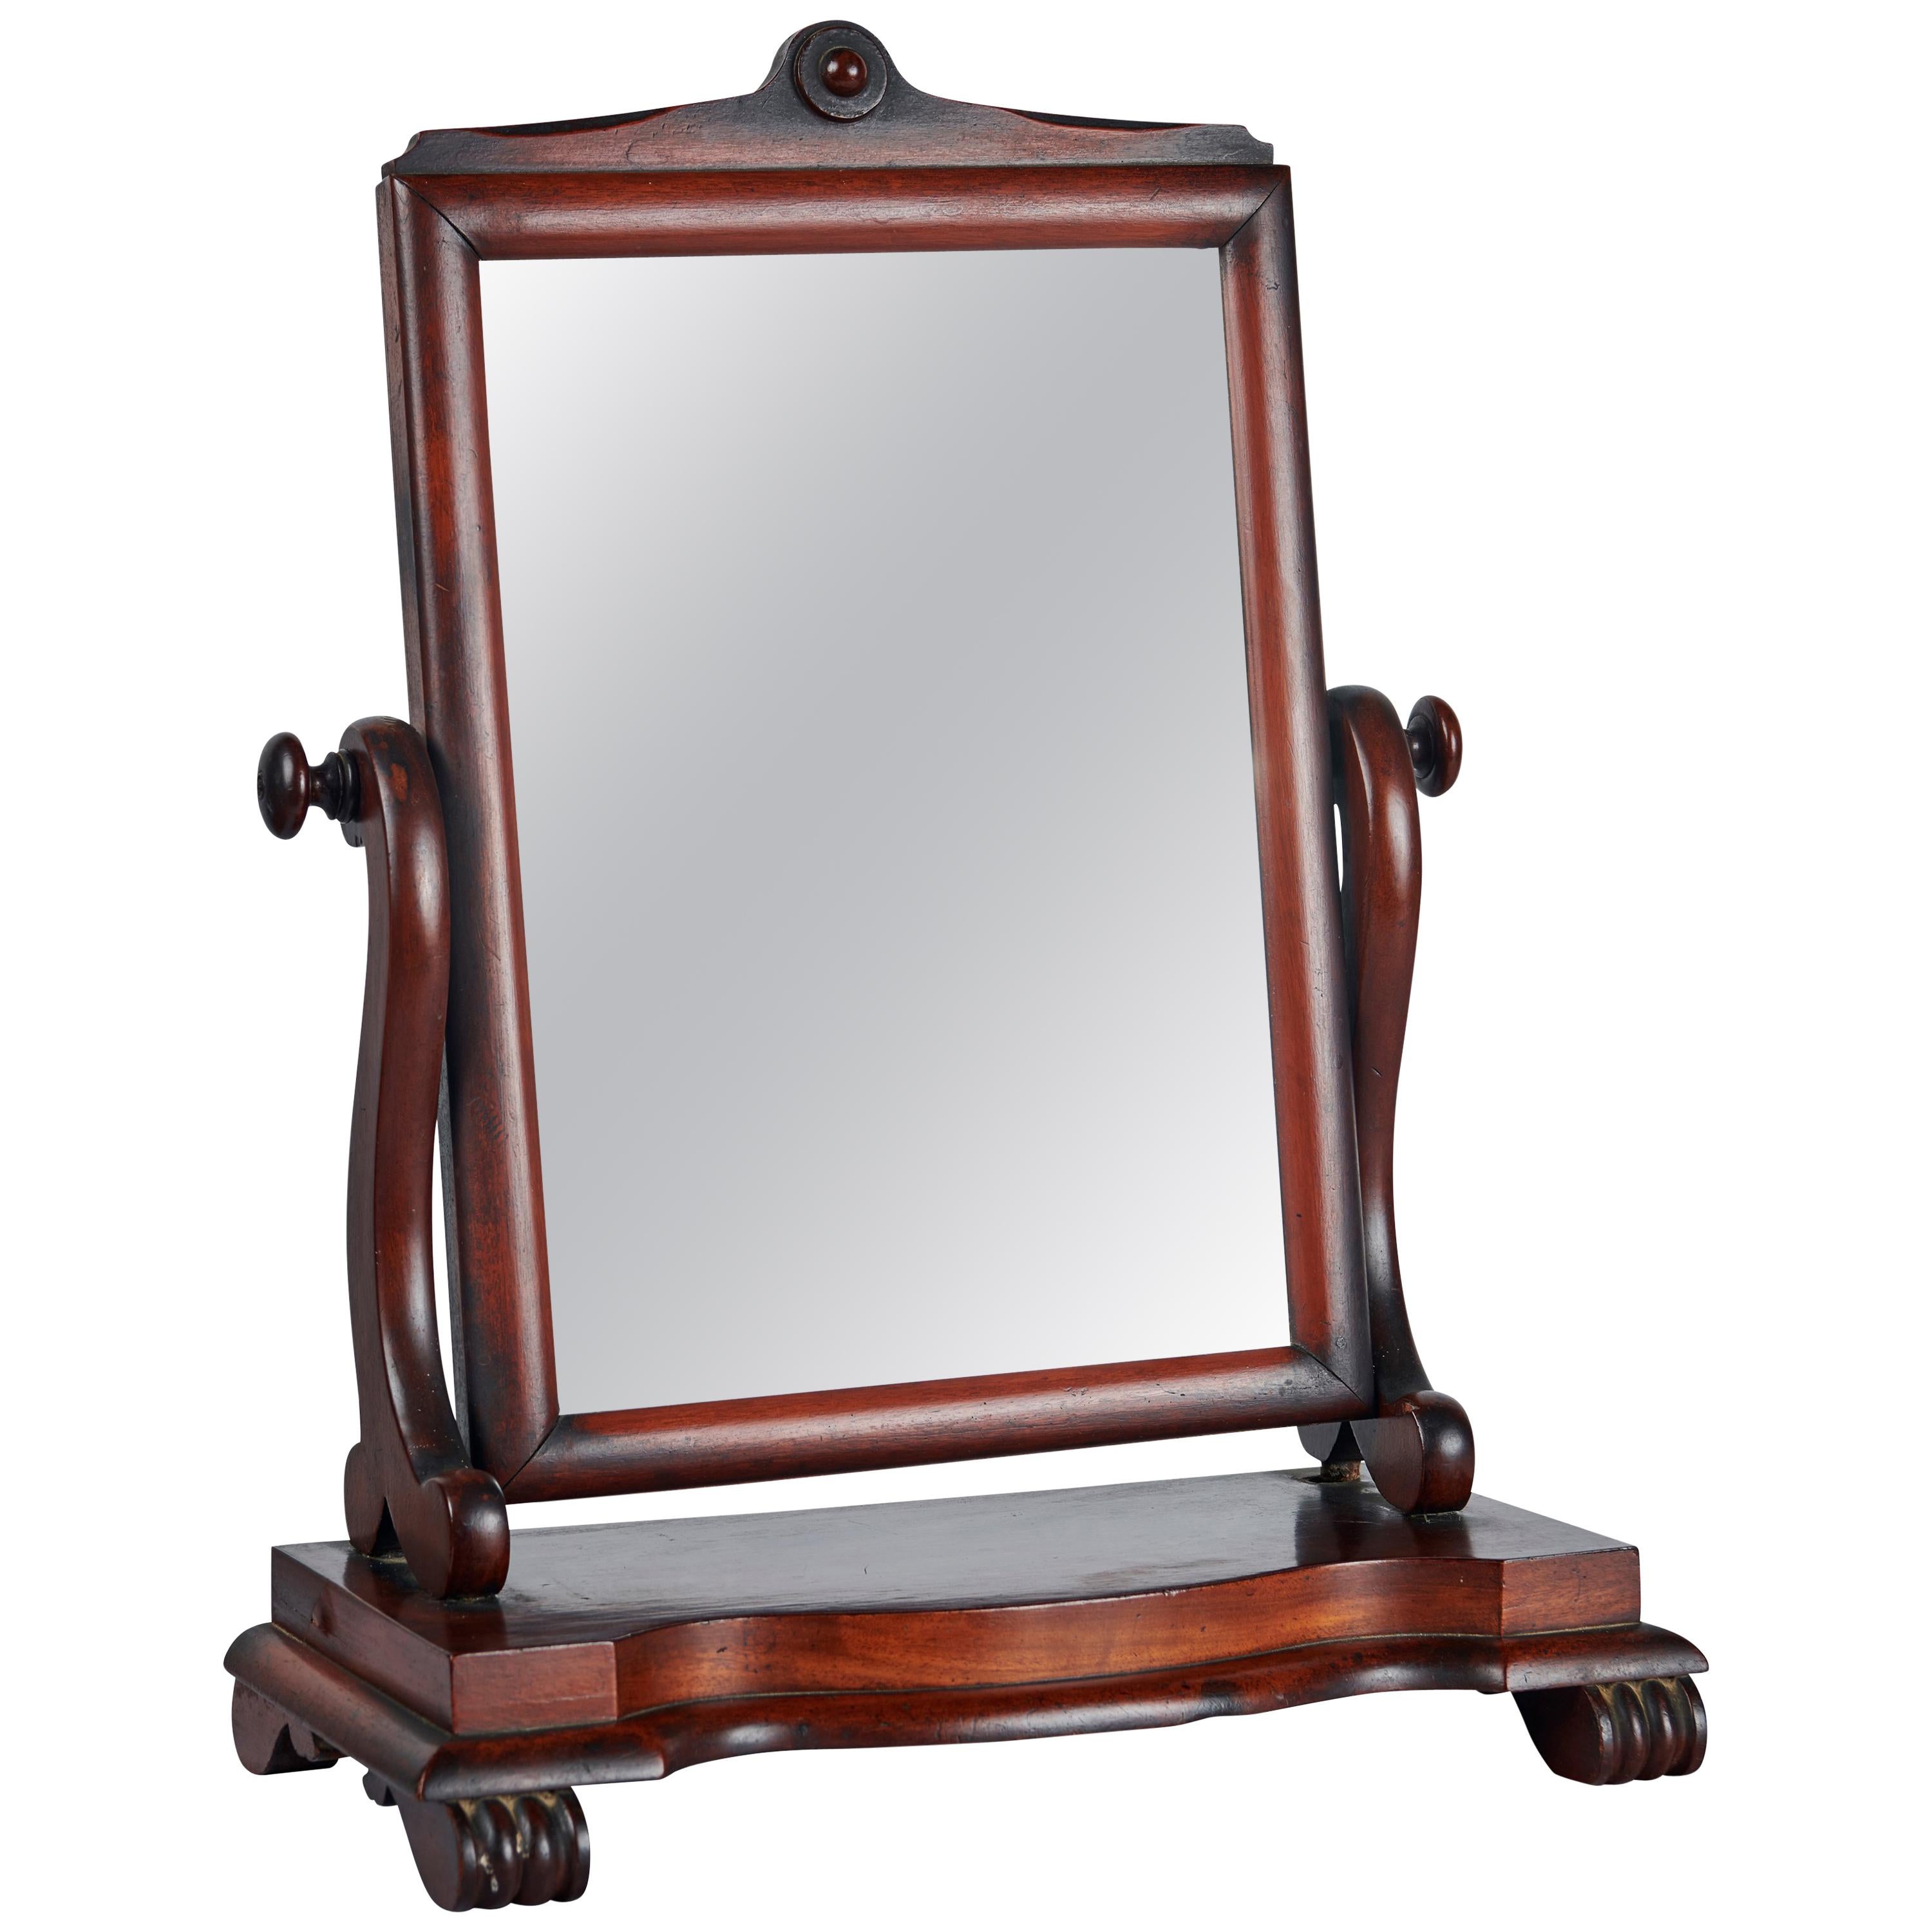 Late 19th Century, English Mahogany Gentleman’s Shaving Mirror